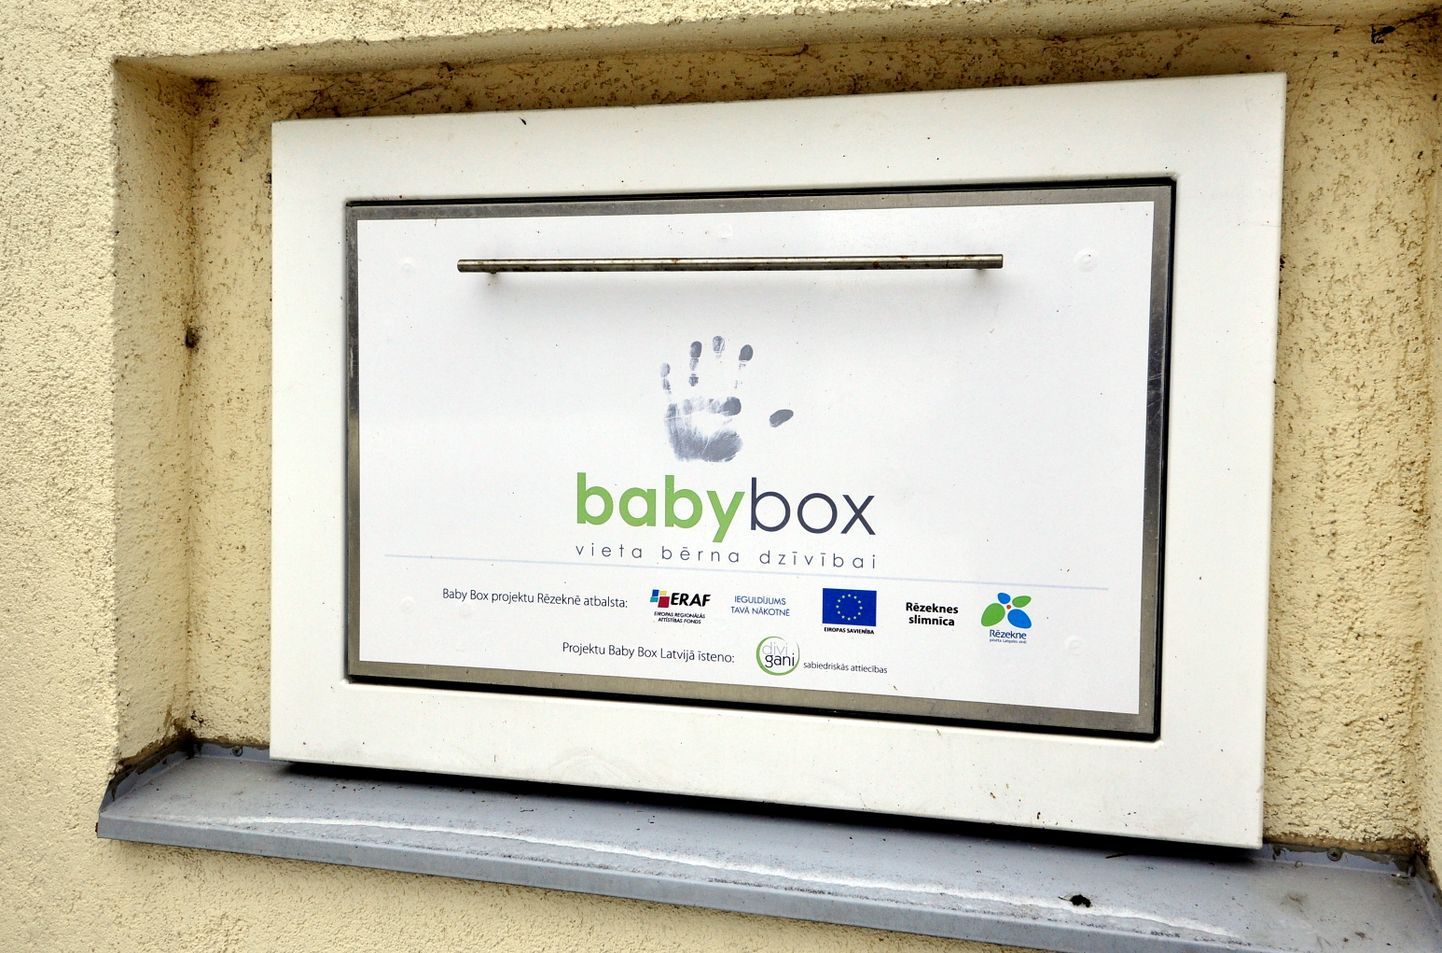 Glābējsilīte ("Baby box") Rēzeknes slimnīcā.